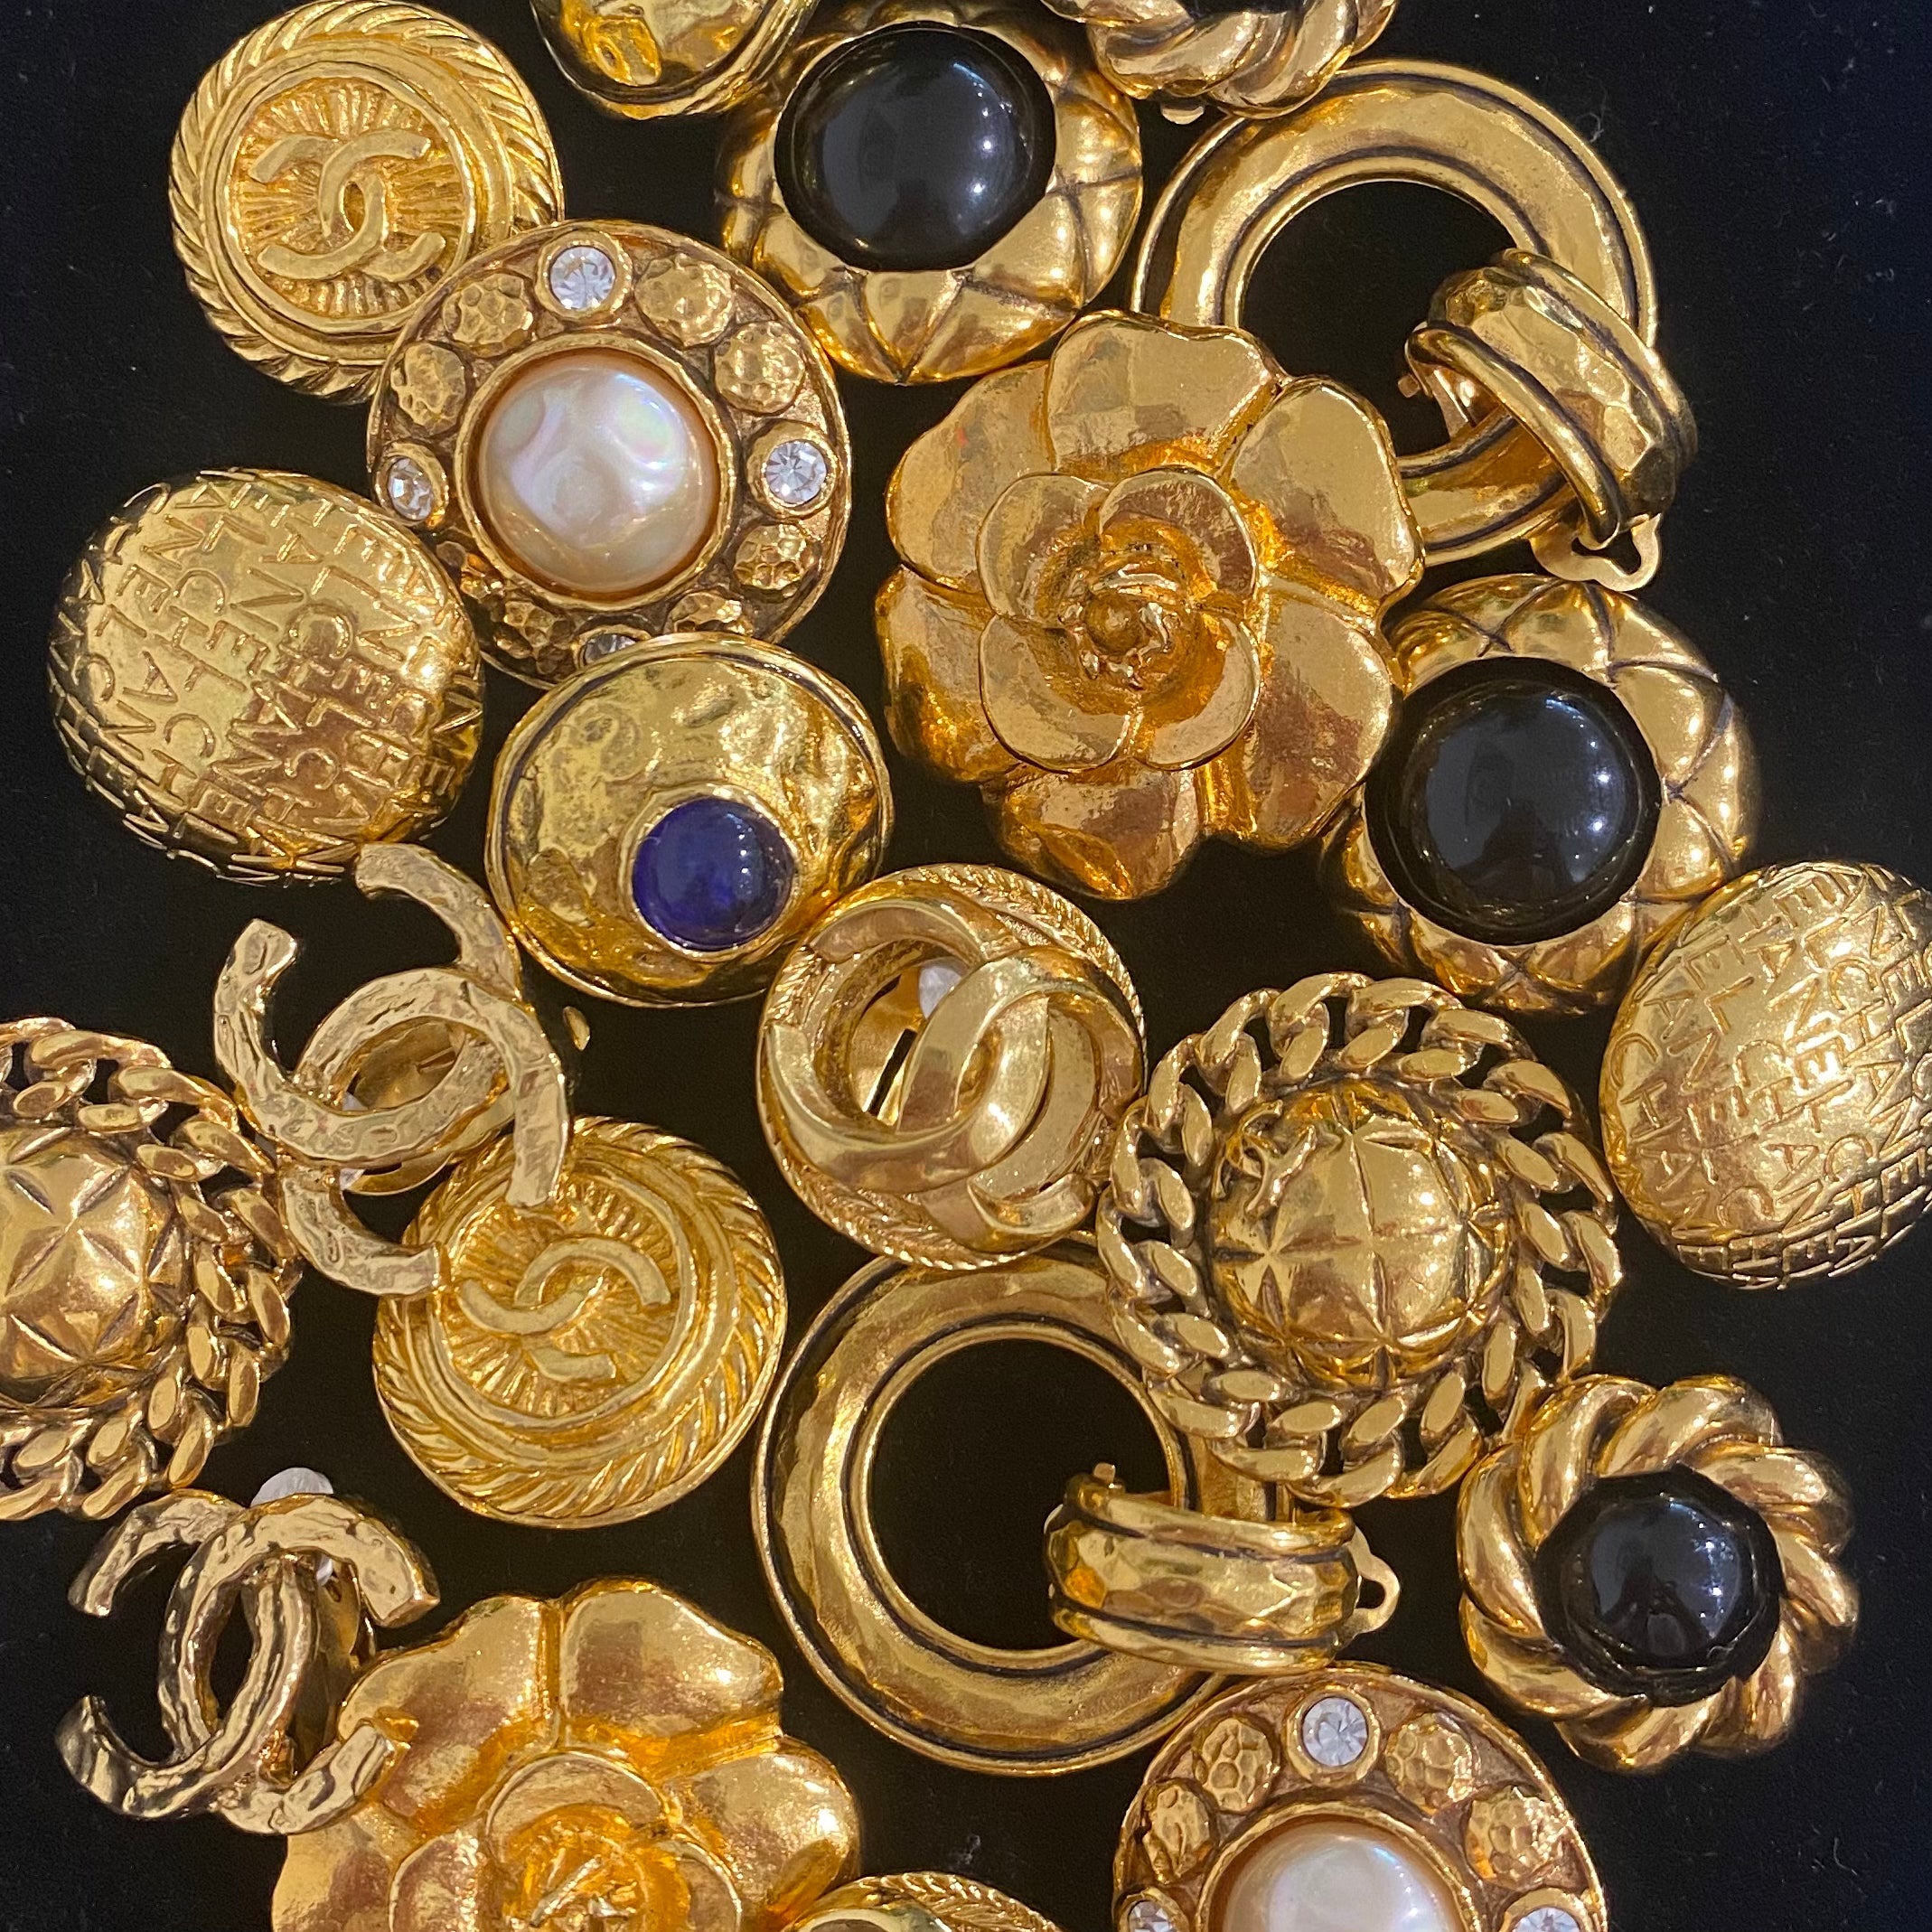 Authentic vintage Chanel earrings rhinestone CC gold heart dangle